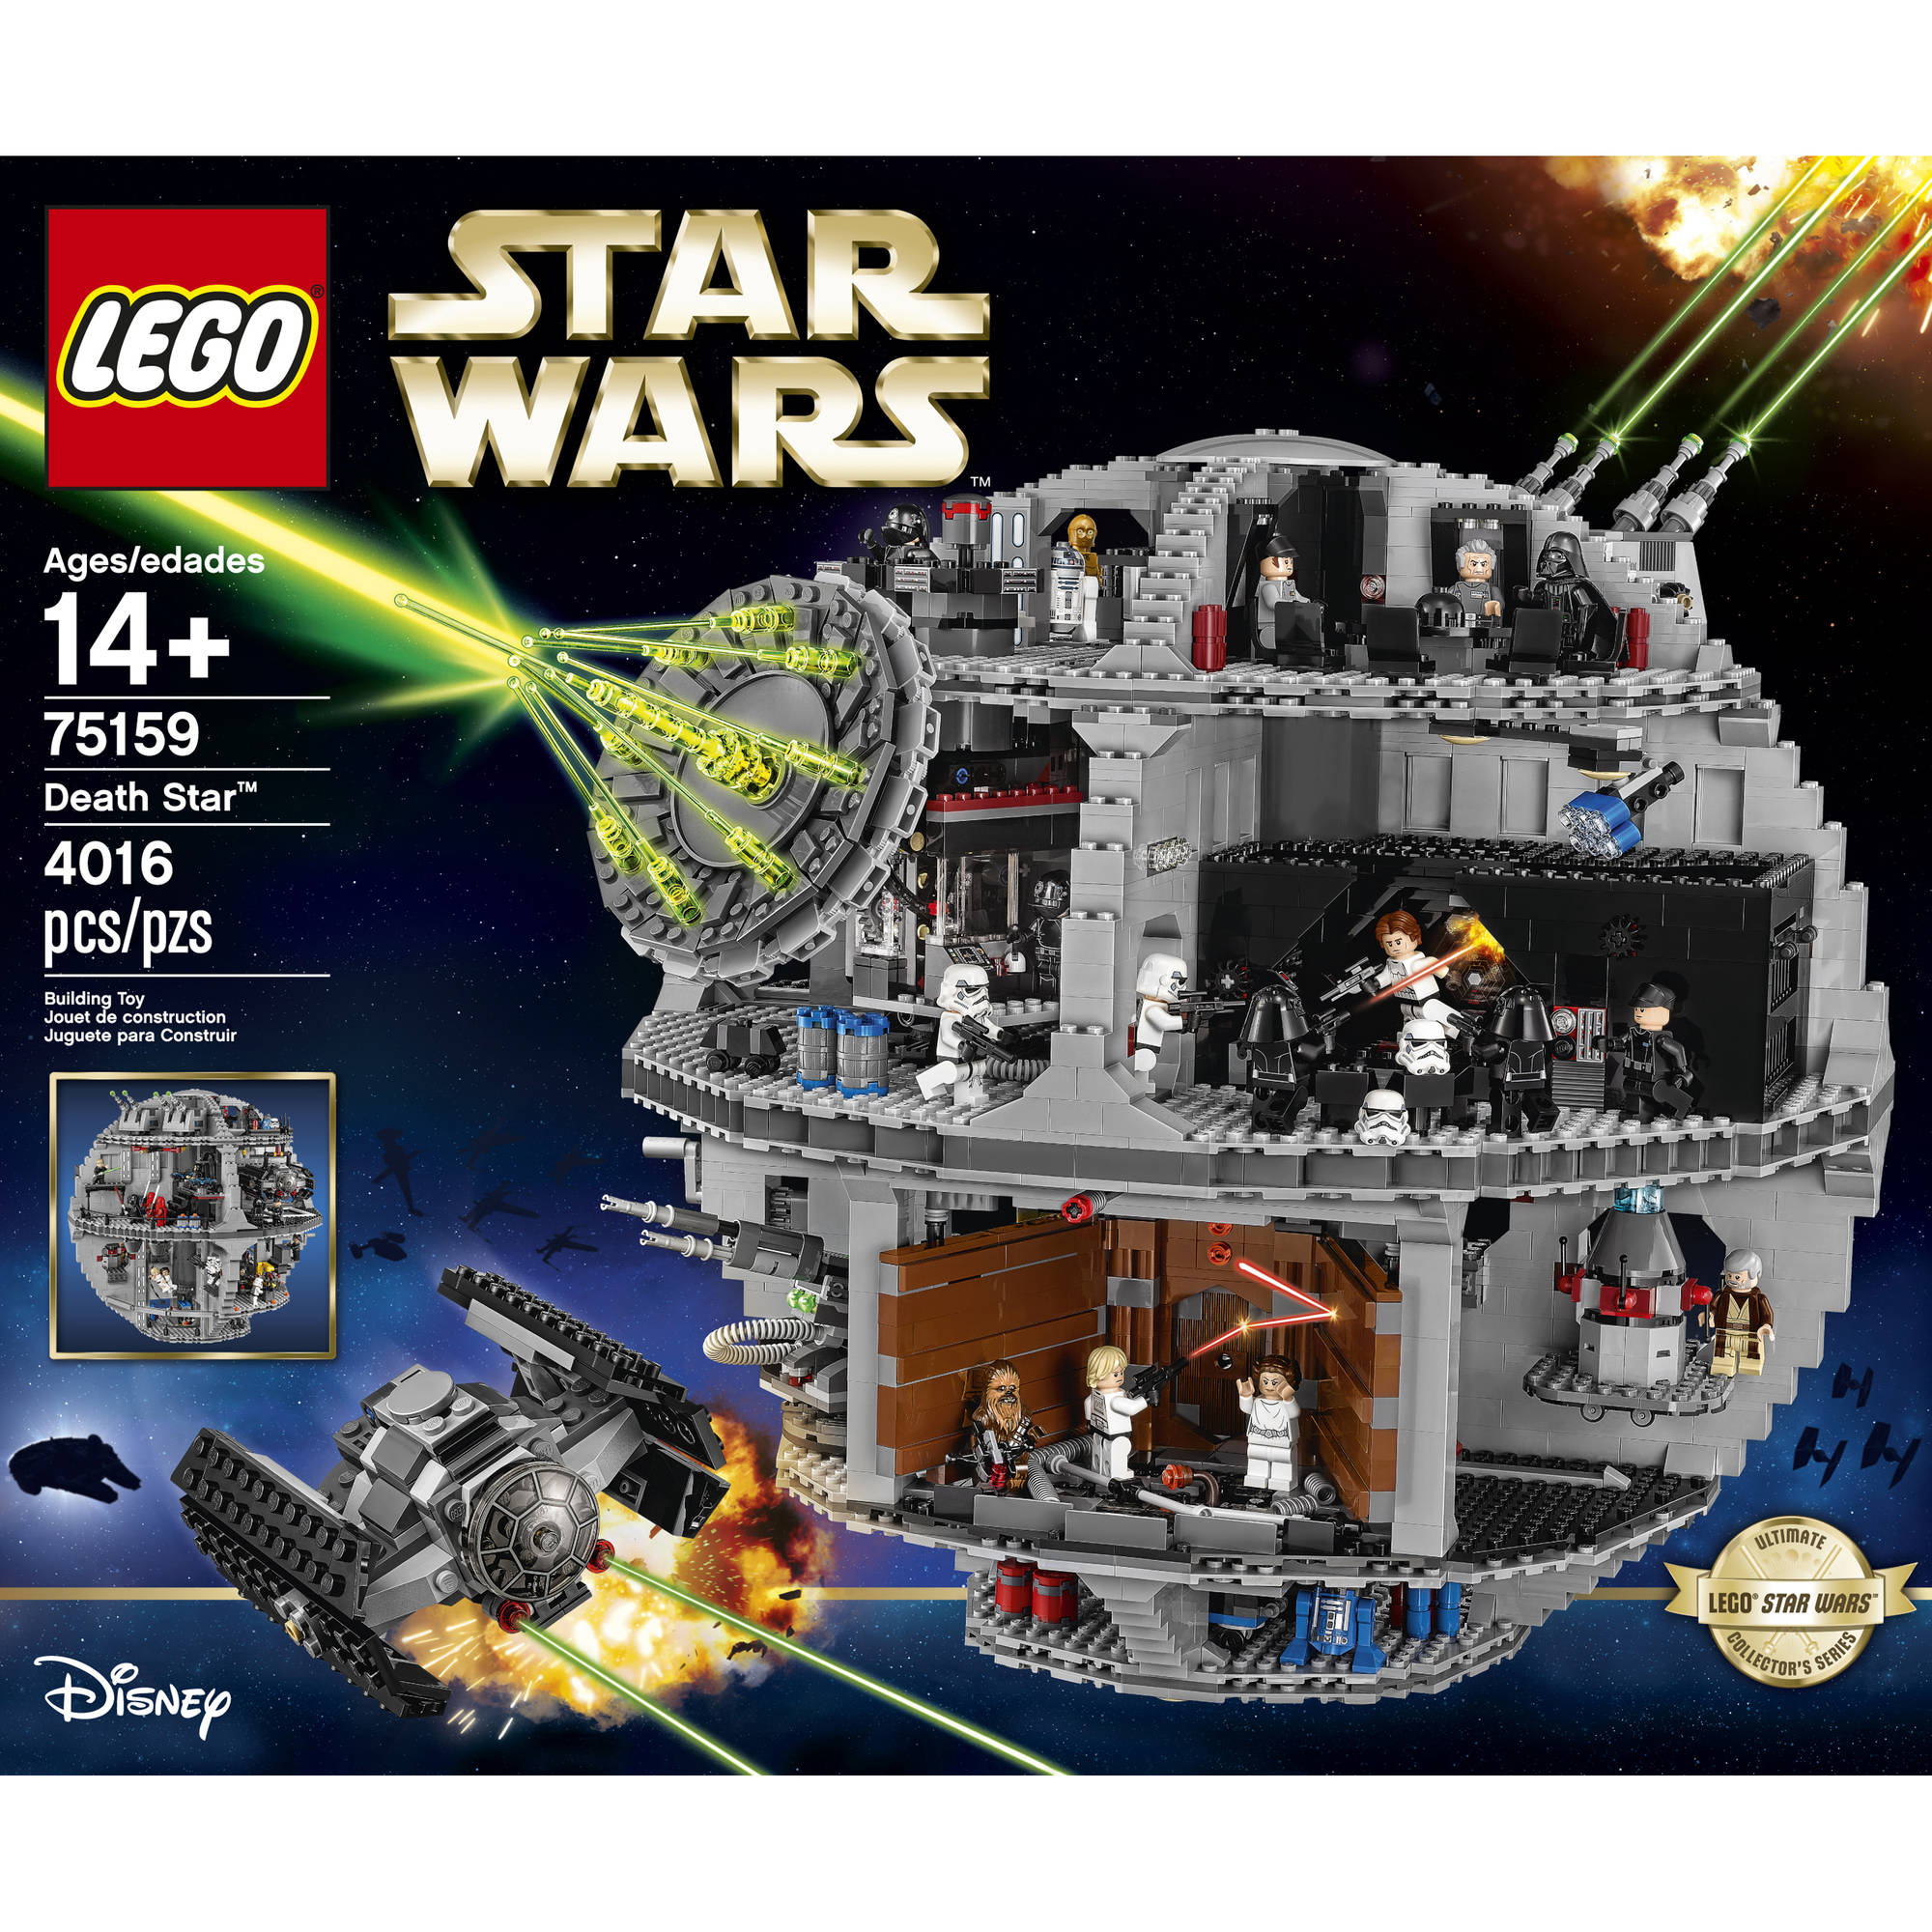 LEGO Star Wars Death Star 75159 Collectbile Building Set - image 4 of 6